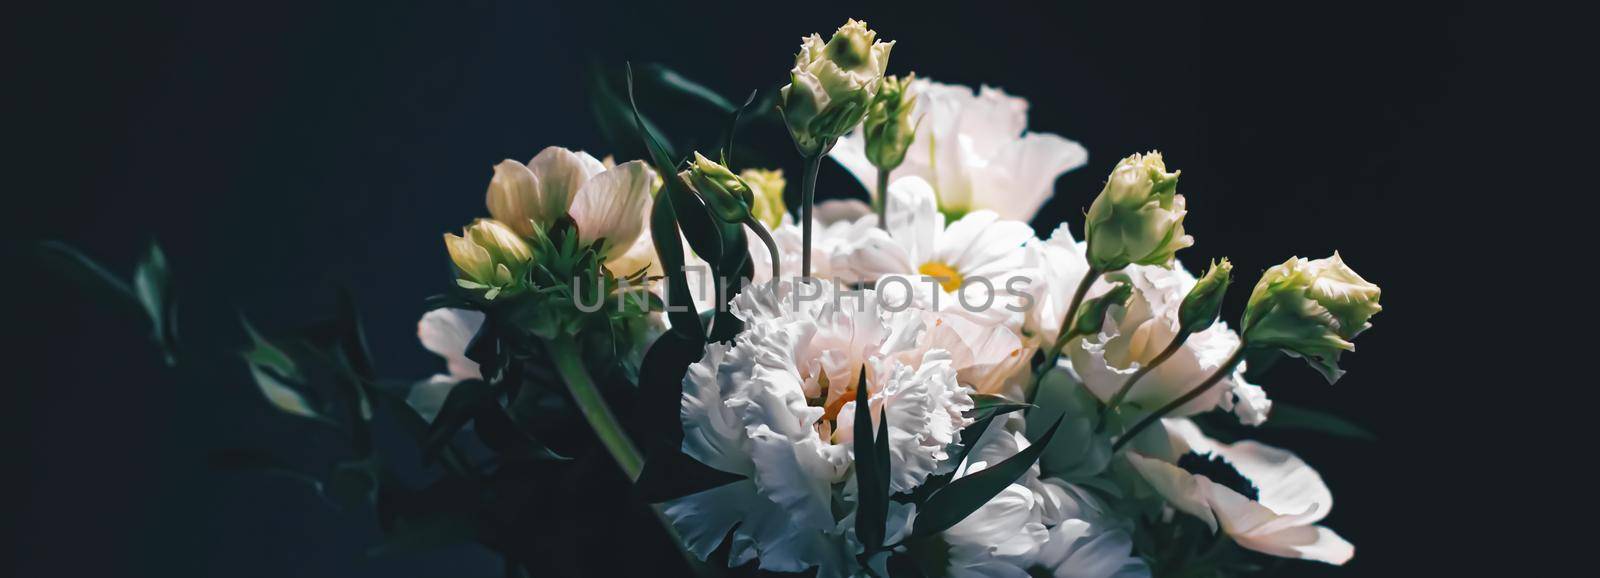 Flower bouquet on black background, beautiful floral arrangement, creative flowers and floristic design idea by Anneleven